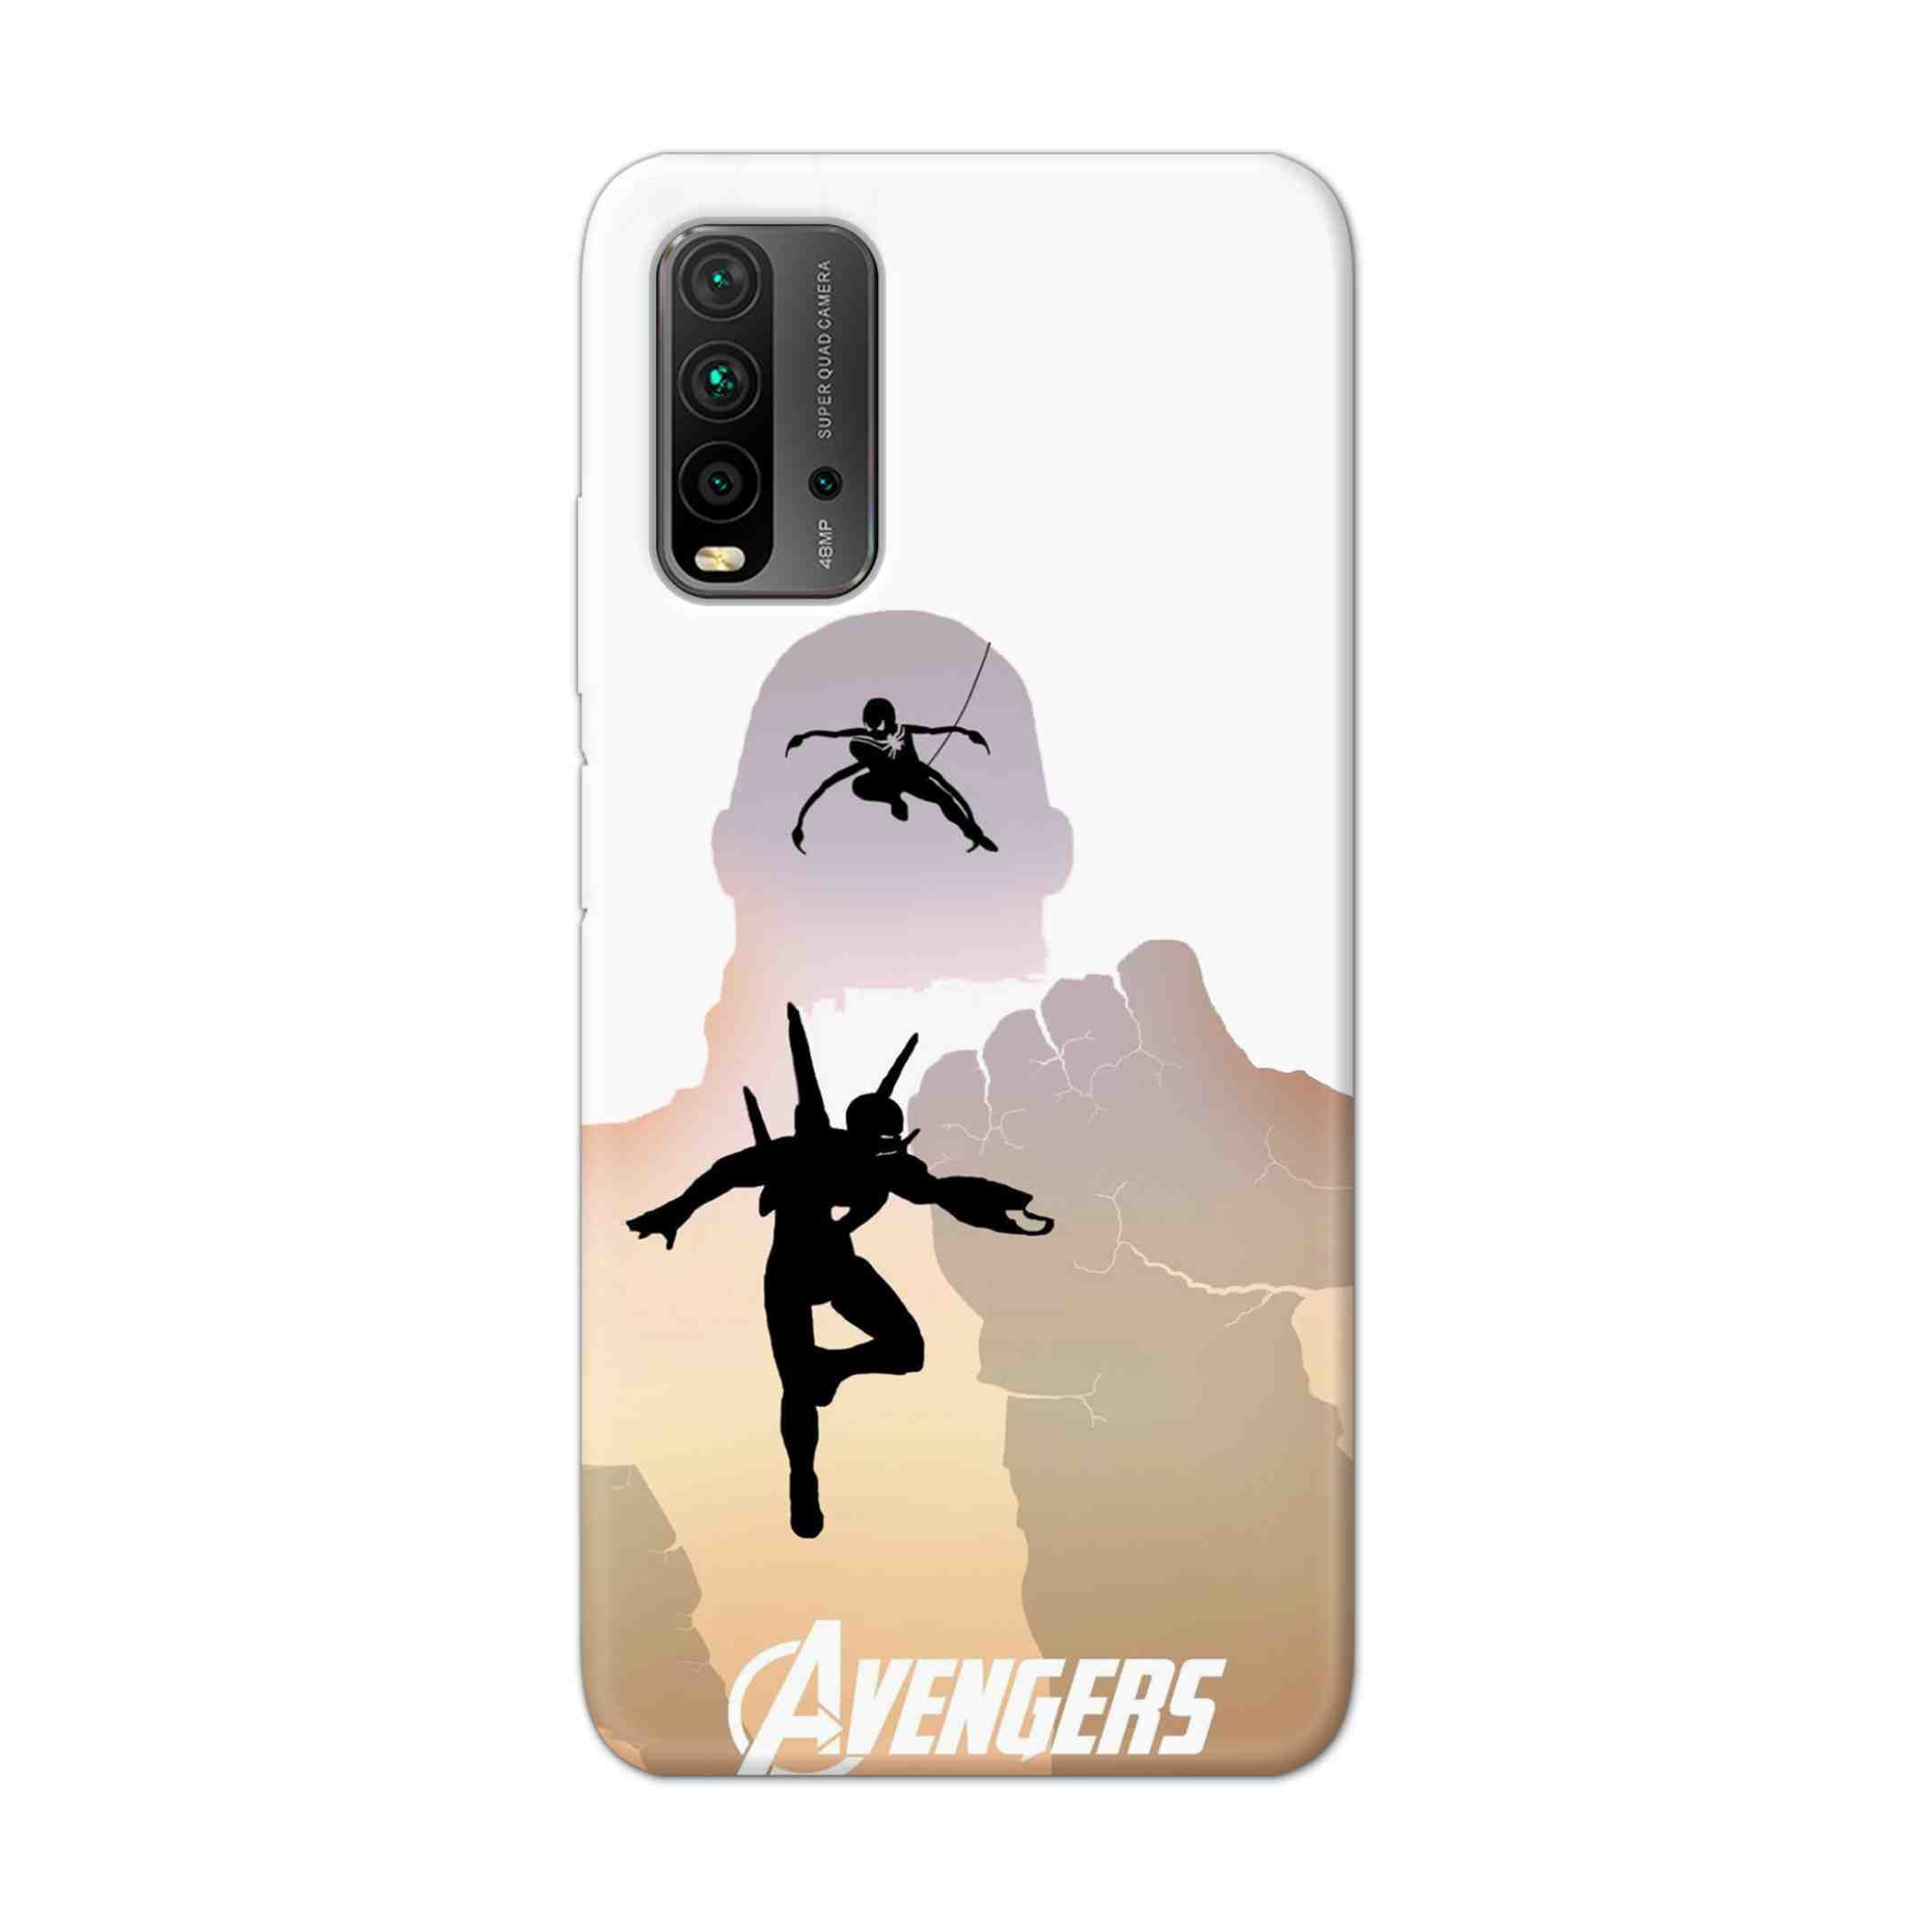 Buy Iron Man Vs Spiderman Hard Back Mobile Phone Case Cover For Redmi 9 Power Online